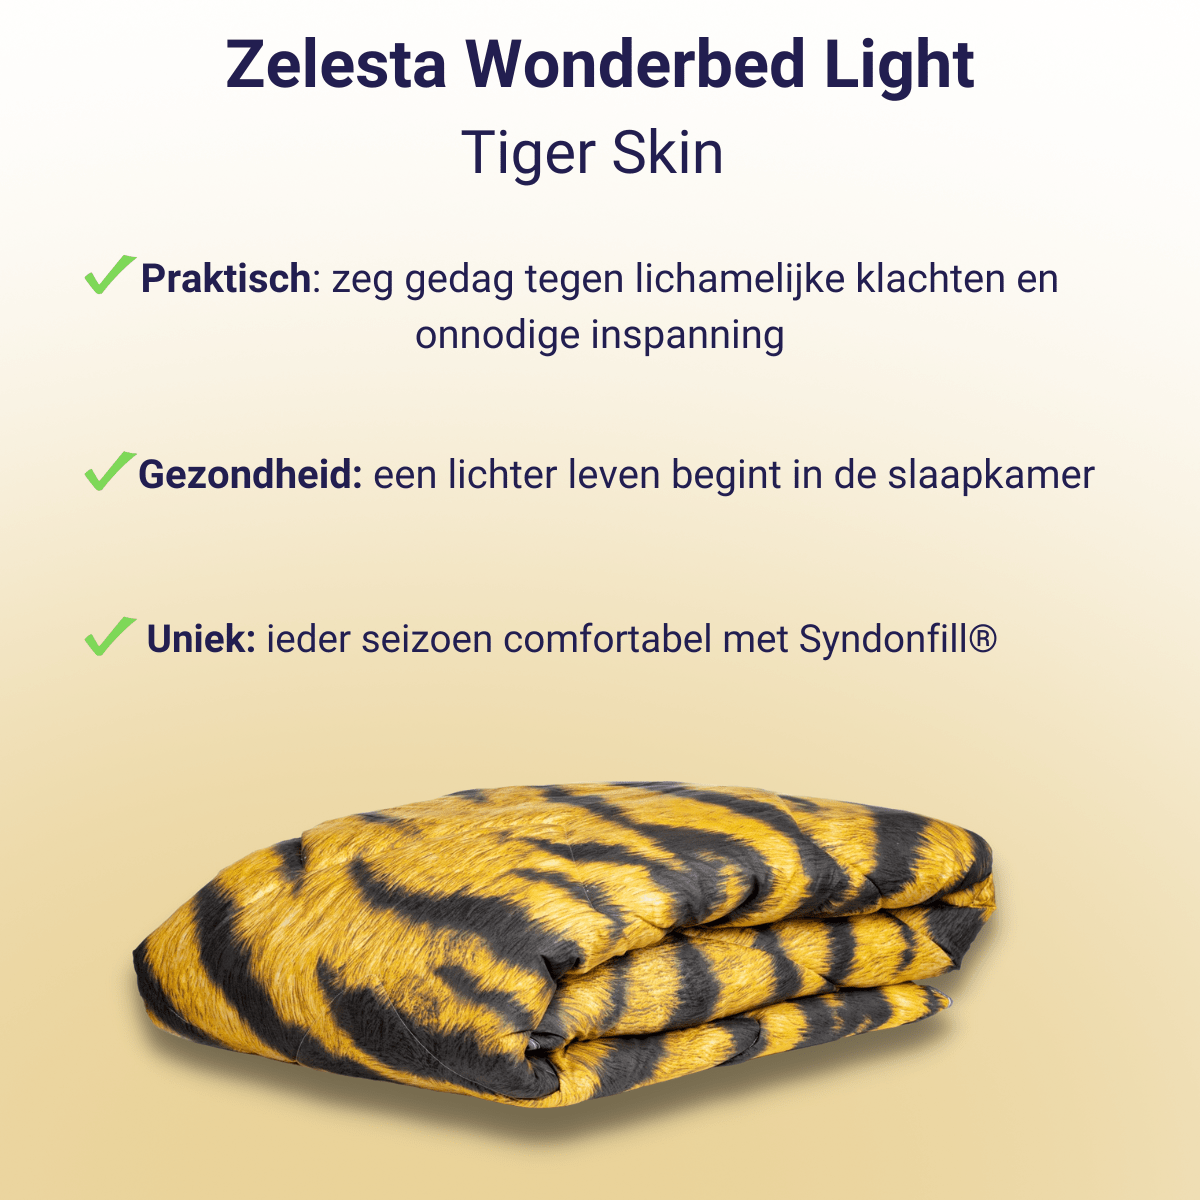 Zelesta Wonderbed Light Tiger Skin Luxe Dekbed Overtrek in 1